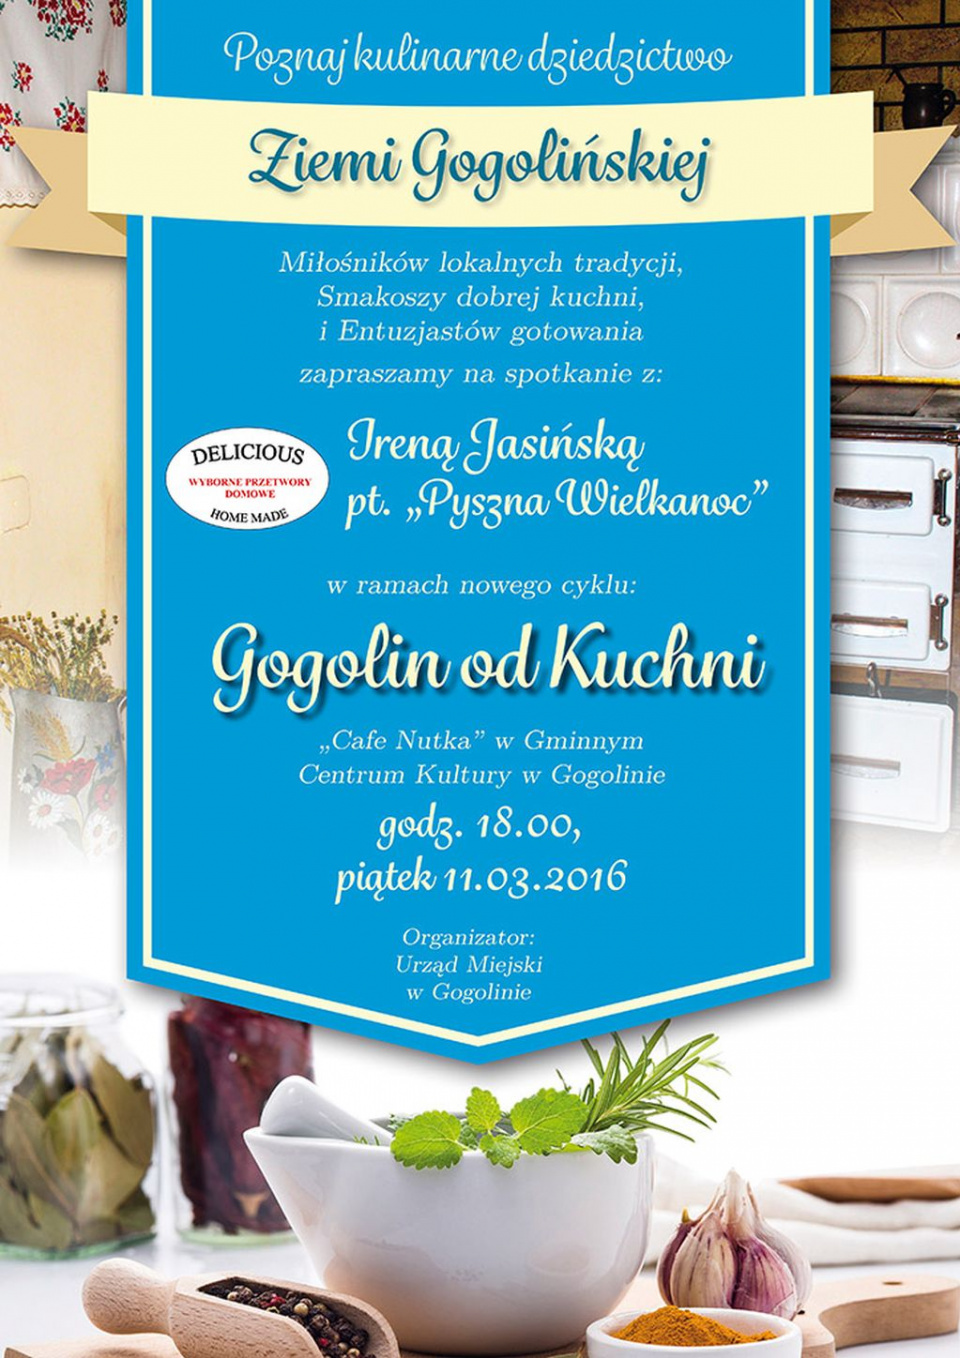 Plakat spotkania Gogolin od Kuchni